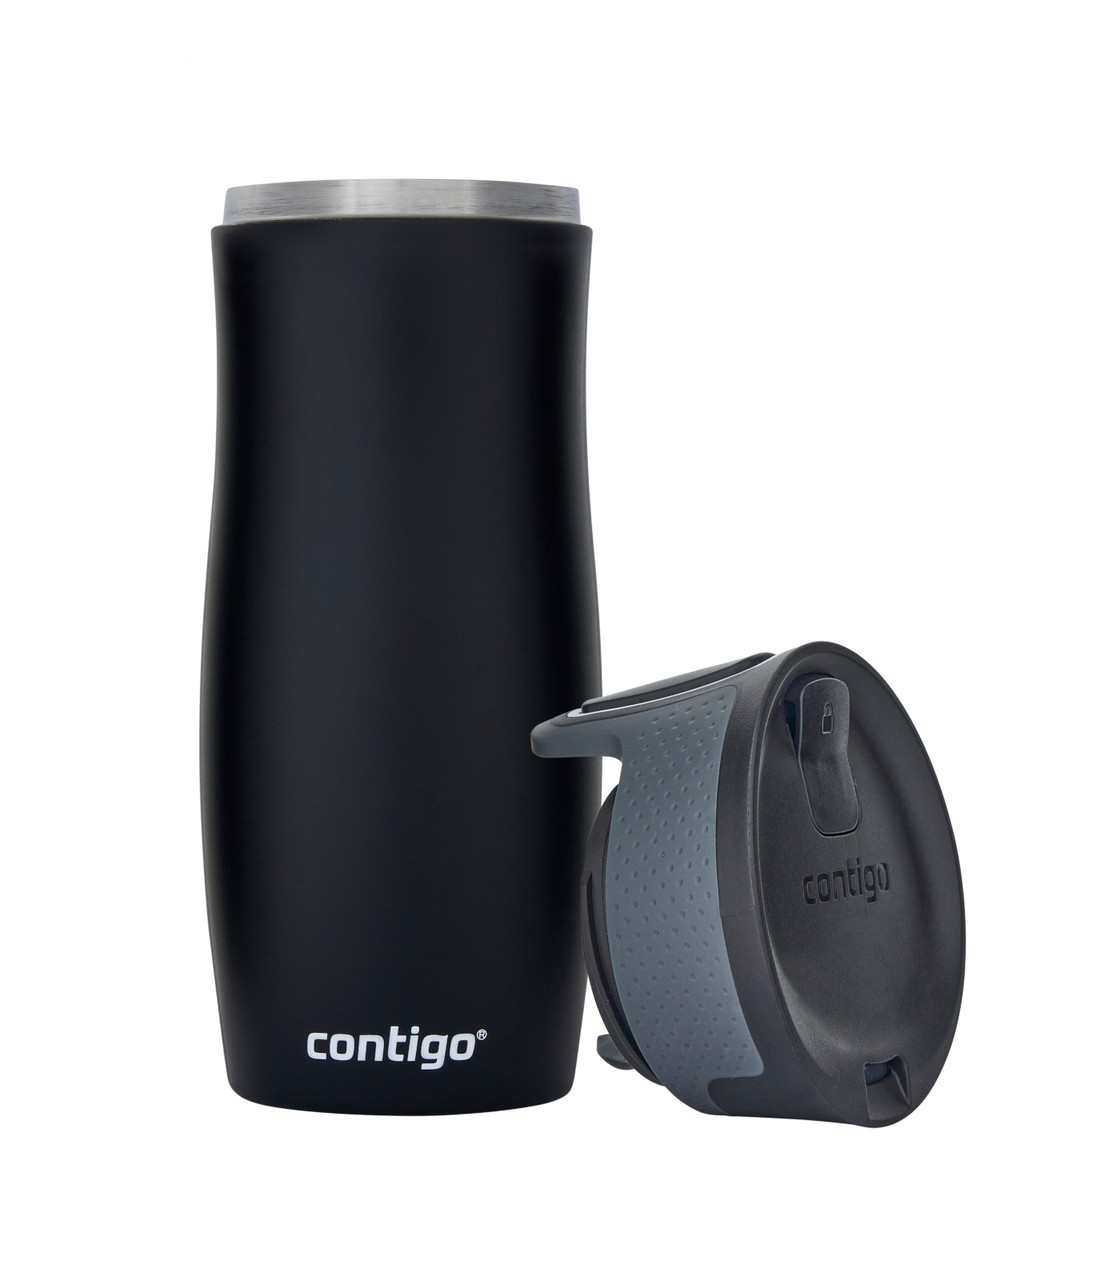 Contigo Autoseal Transit 470ml Travel Mugs Thermal Insulation